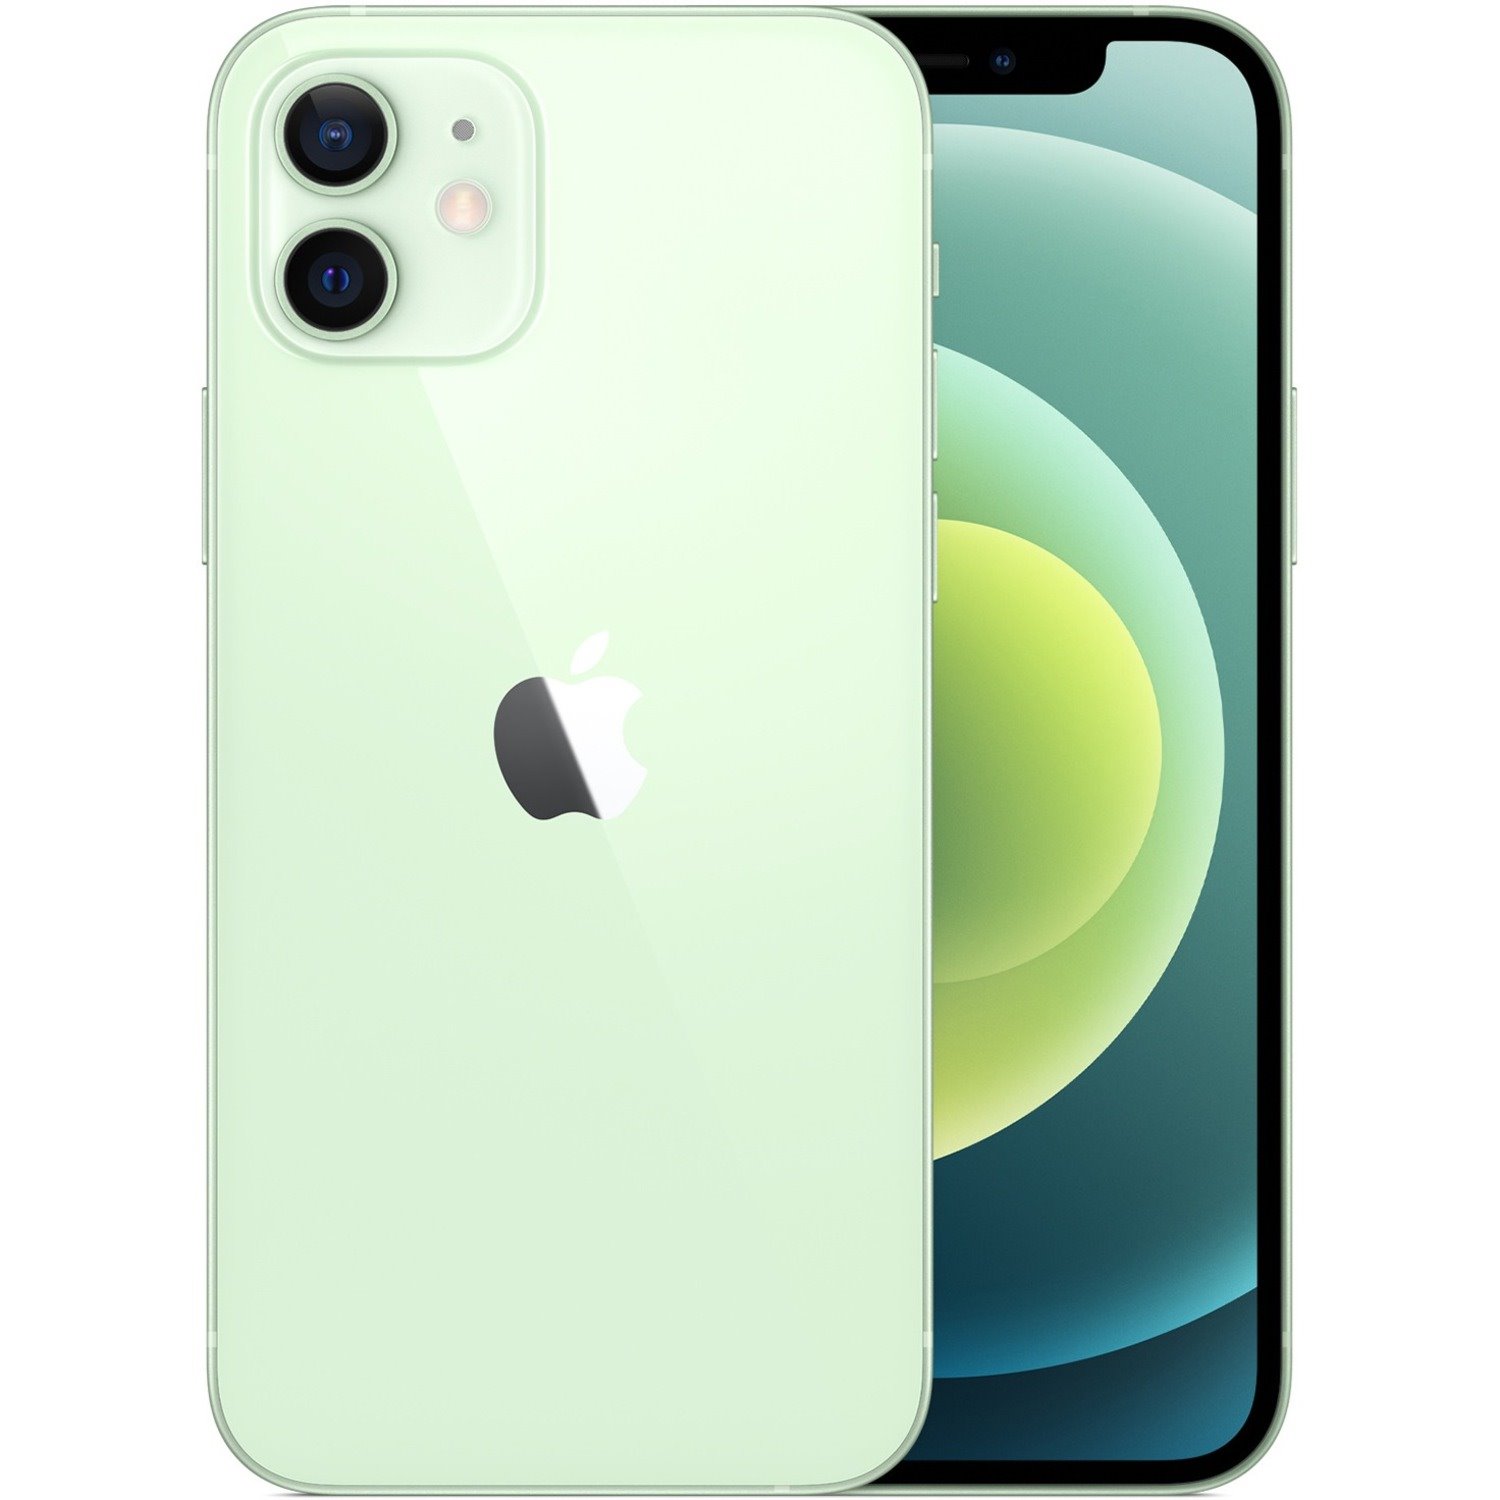 Apple iPhone 12 mini 64 GB Smartphone - 13.7 cm (5.4") OLED Full HD Plus 2340 x 1080 - Hexa-core (6 Core) - iOS 14 - 5G - Green